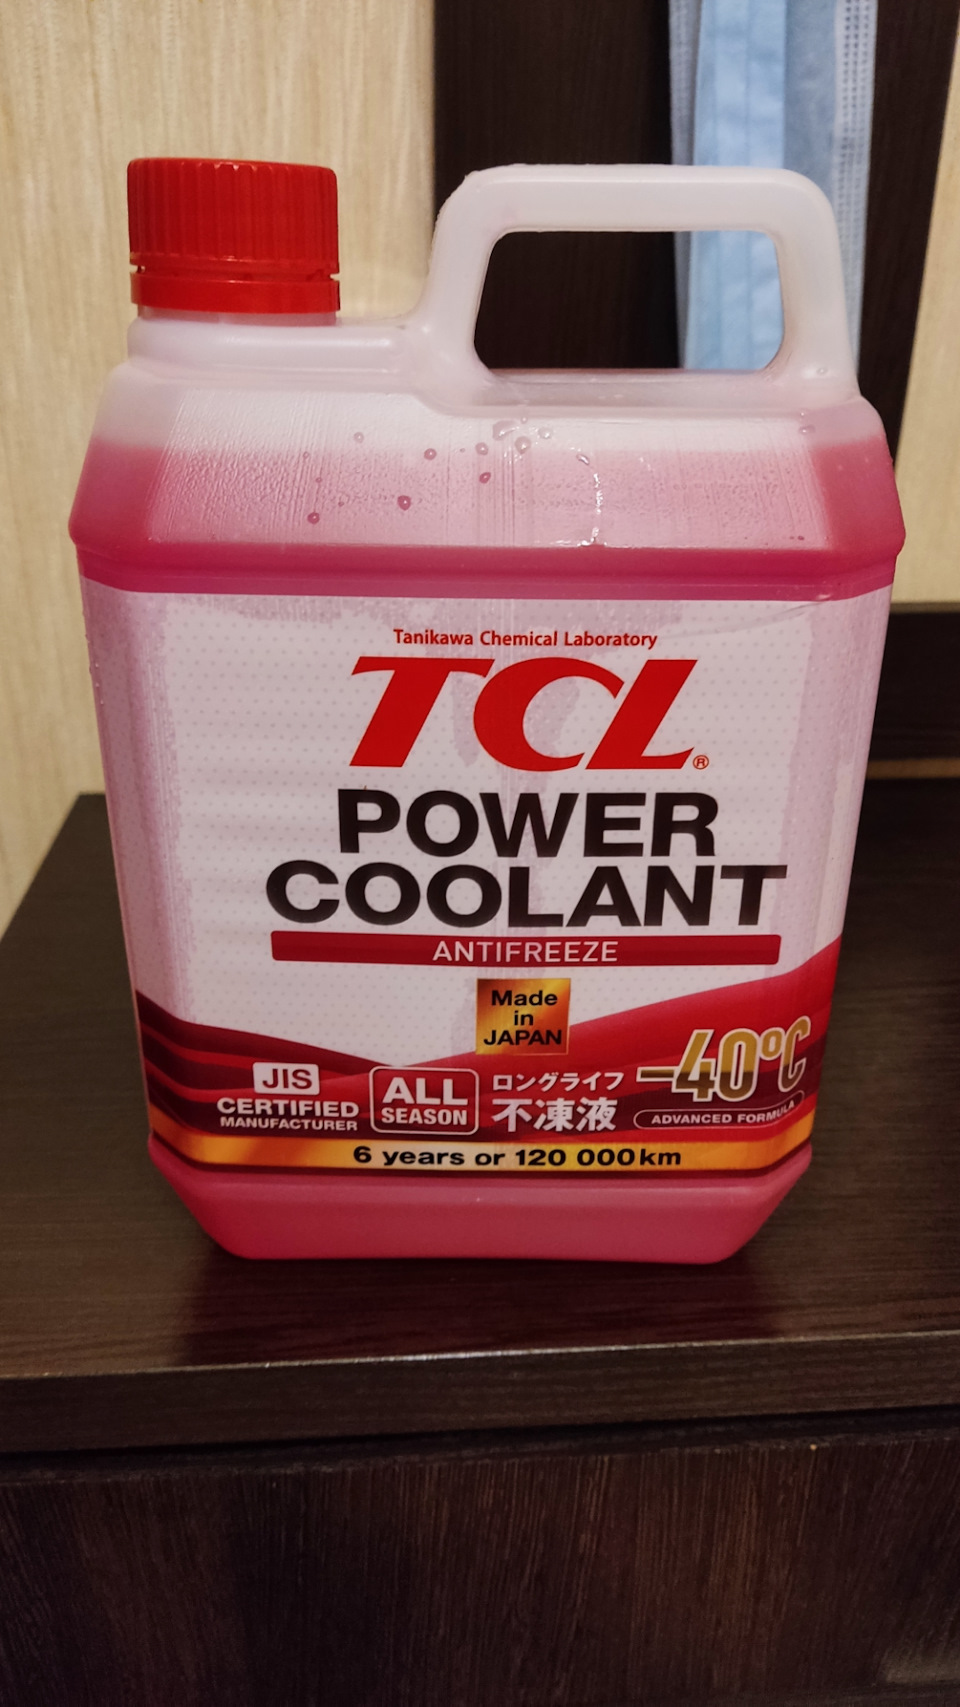 Аква запчасть. TCL Power Coolant концентрат. Антифриз TCL Power Coolant Pink. Антифриз для Тойота Аква. Антифриз для Тойота Аква 2017.